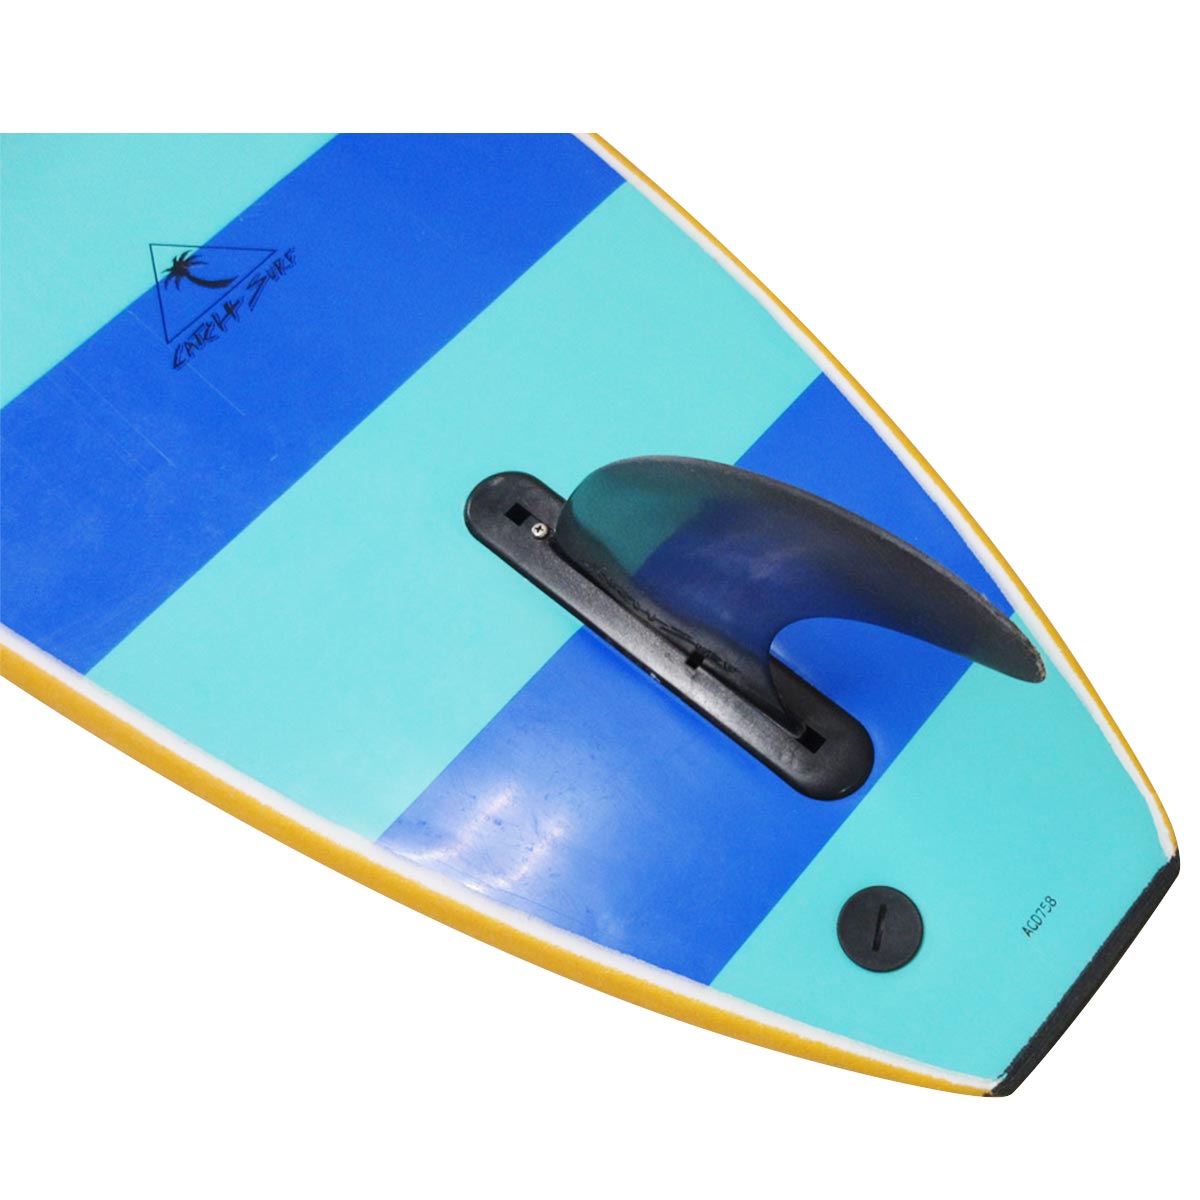 CATCH SURF / PLANK 9`0